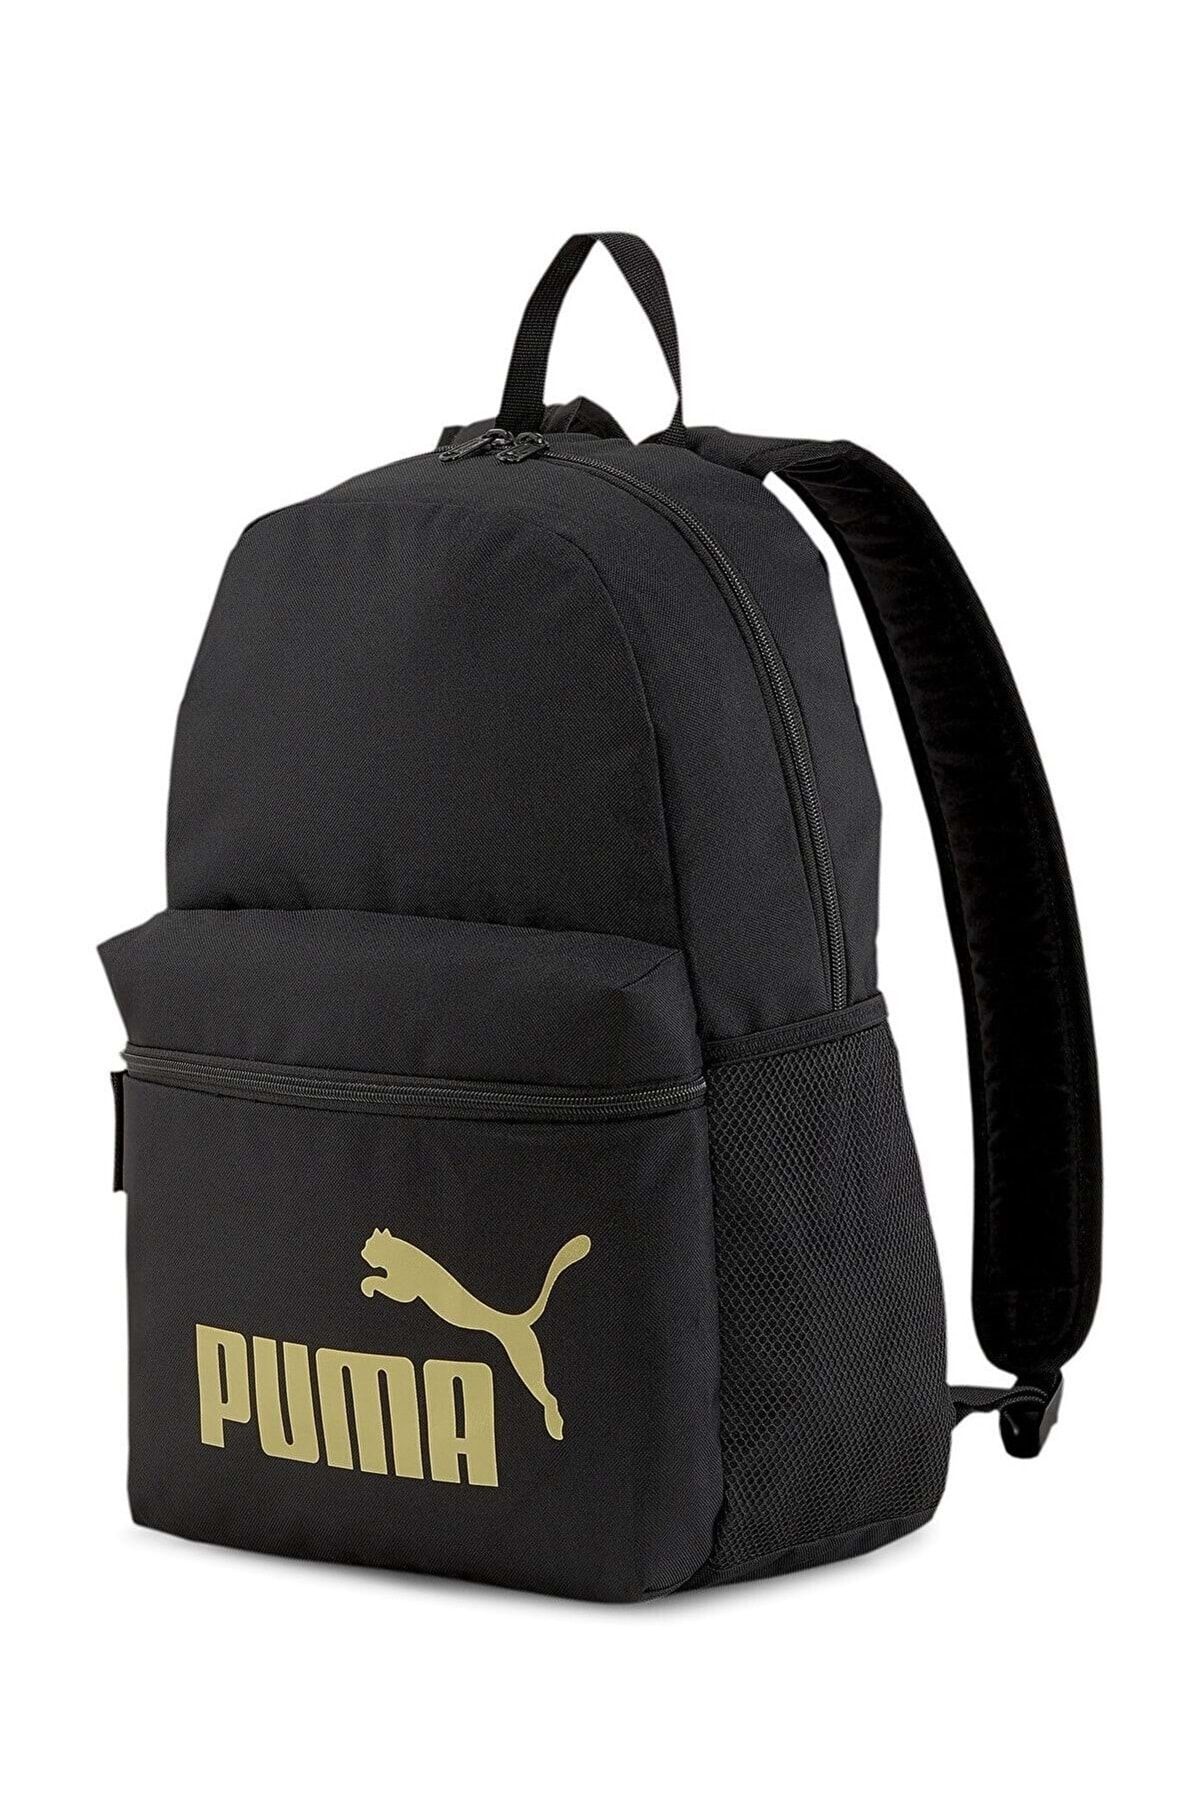 Puma Phase Backpack 075487-49 Unisex Sırt Çantası